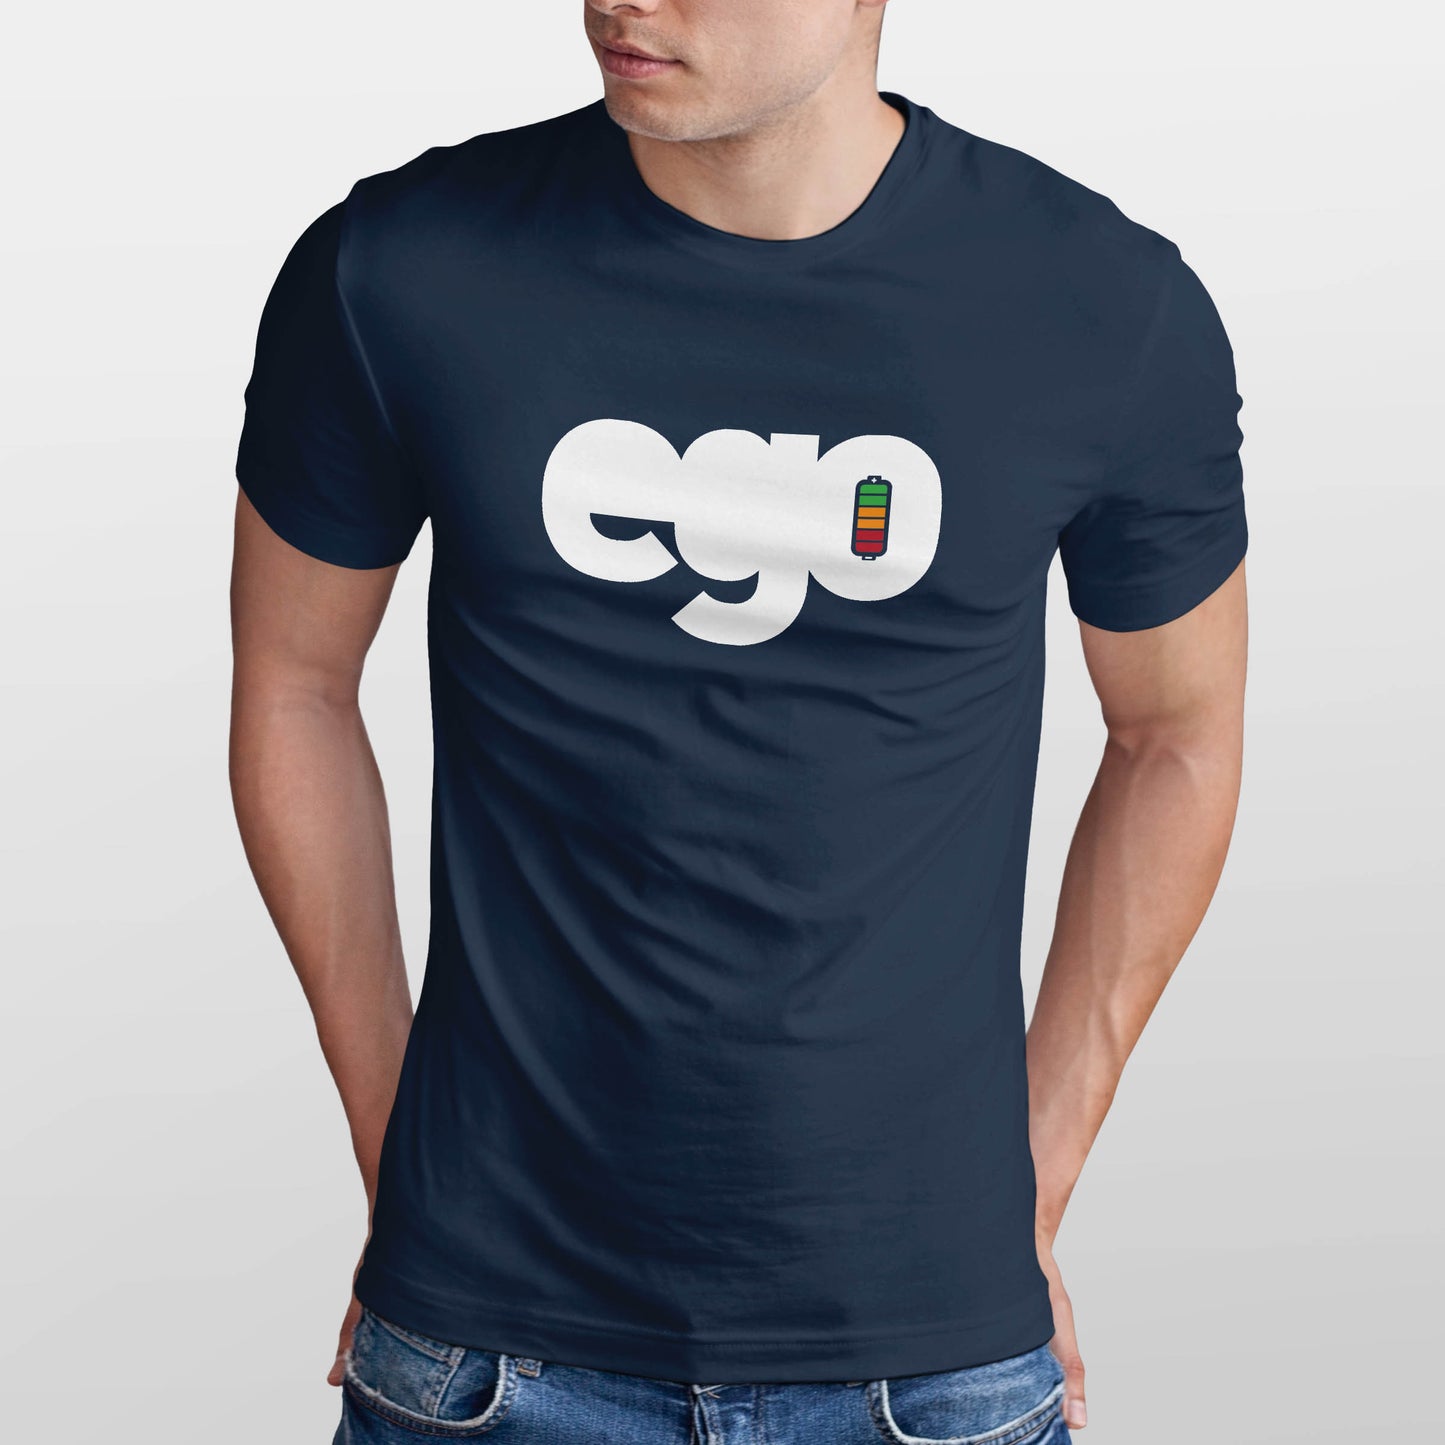 EGO Men's T-shirt (White)